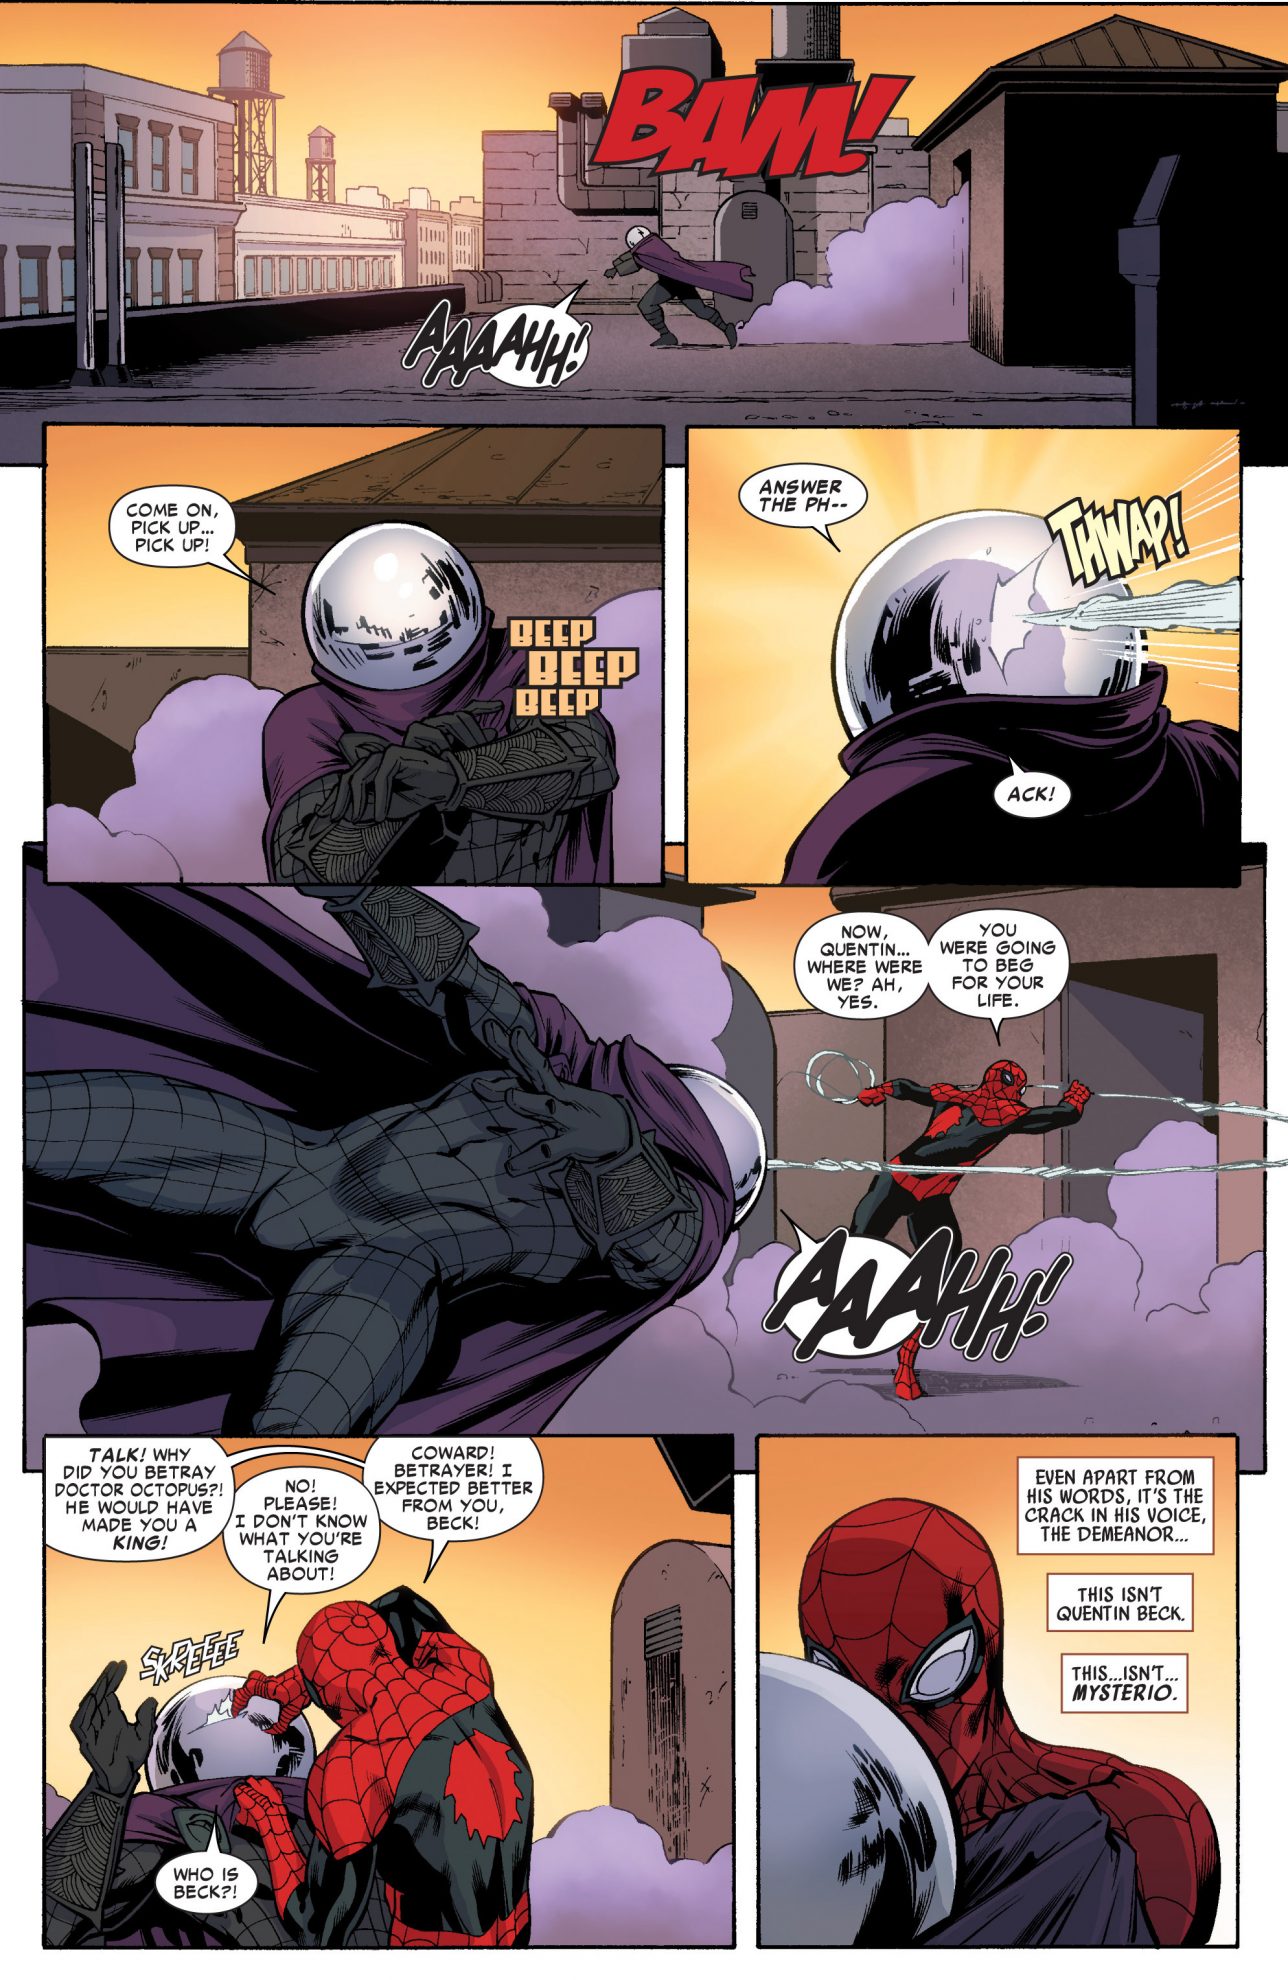 Superior Spider-Man VS Mysterion